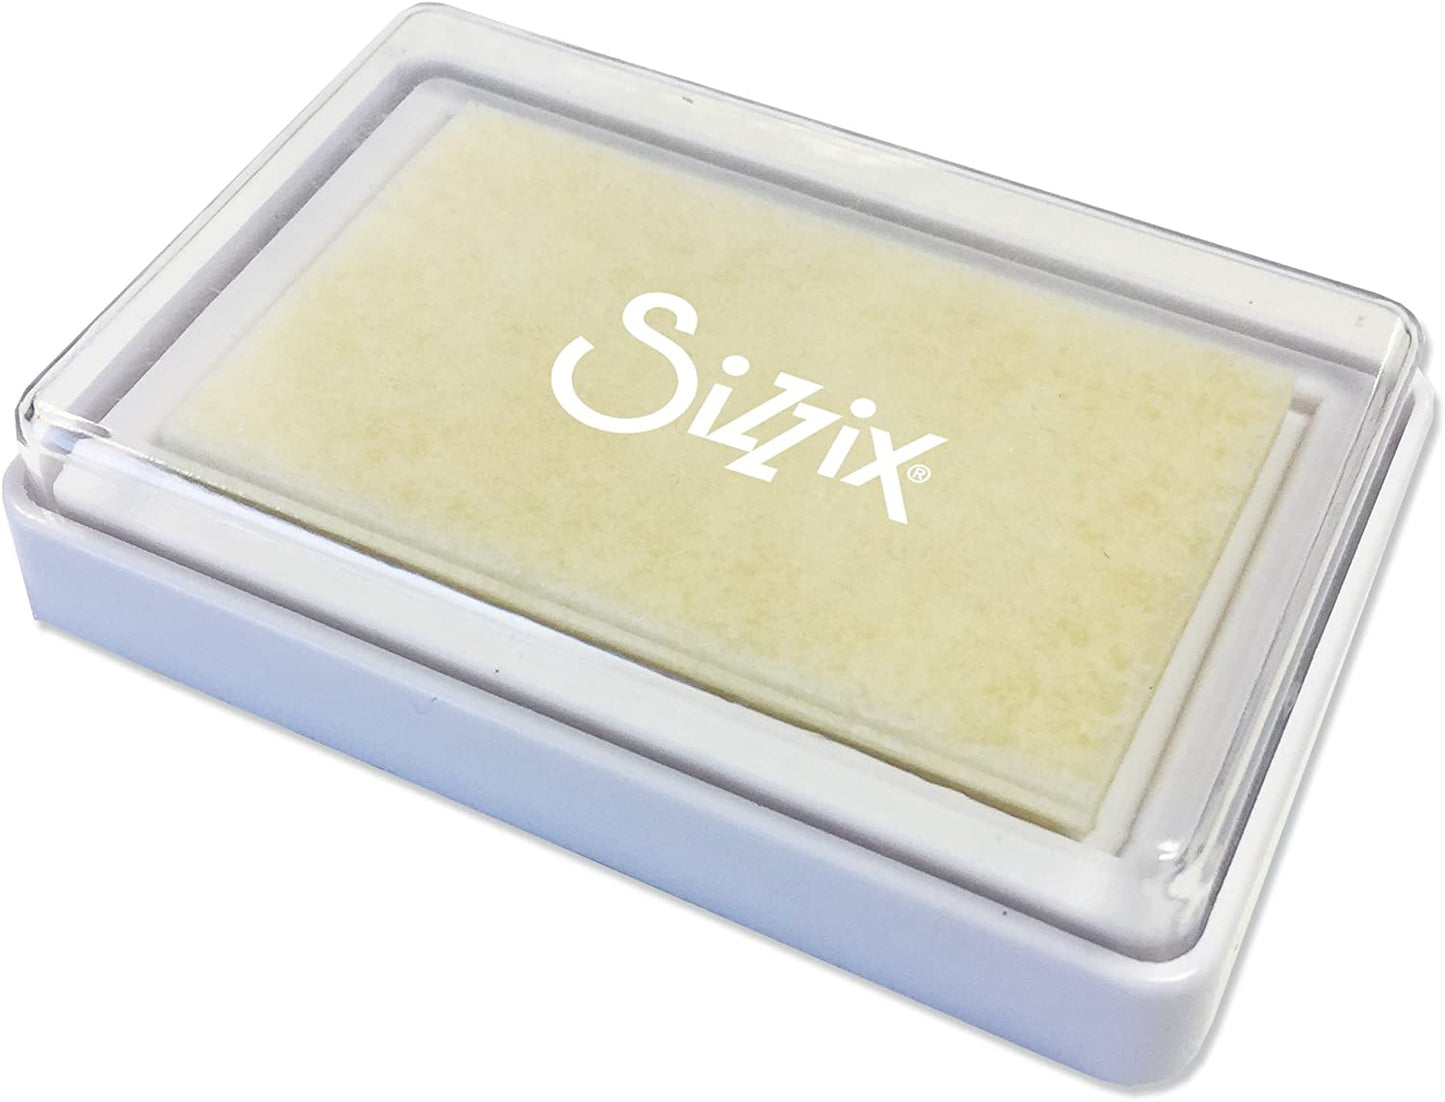 SIZZIX 663012  Embossing Ink Pad , Transparente, Tamanho único, 16 x 14 x 3 cm